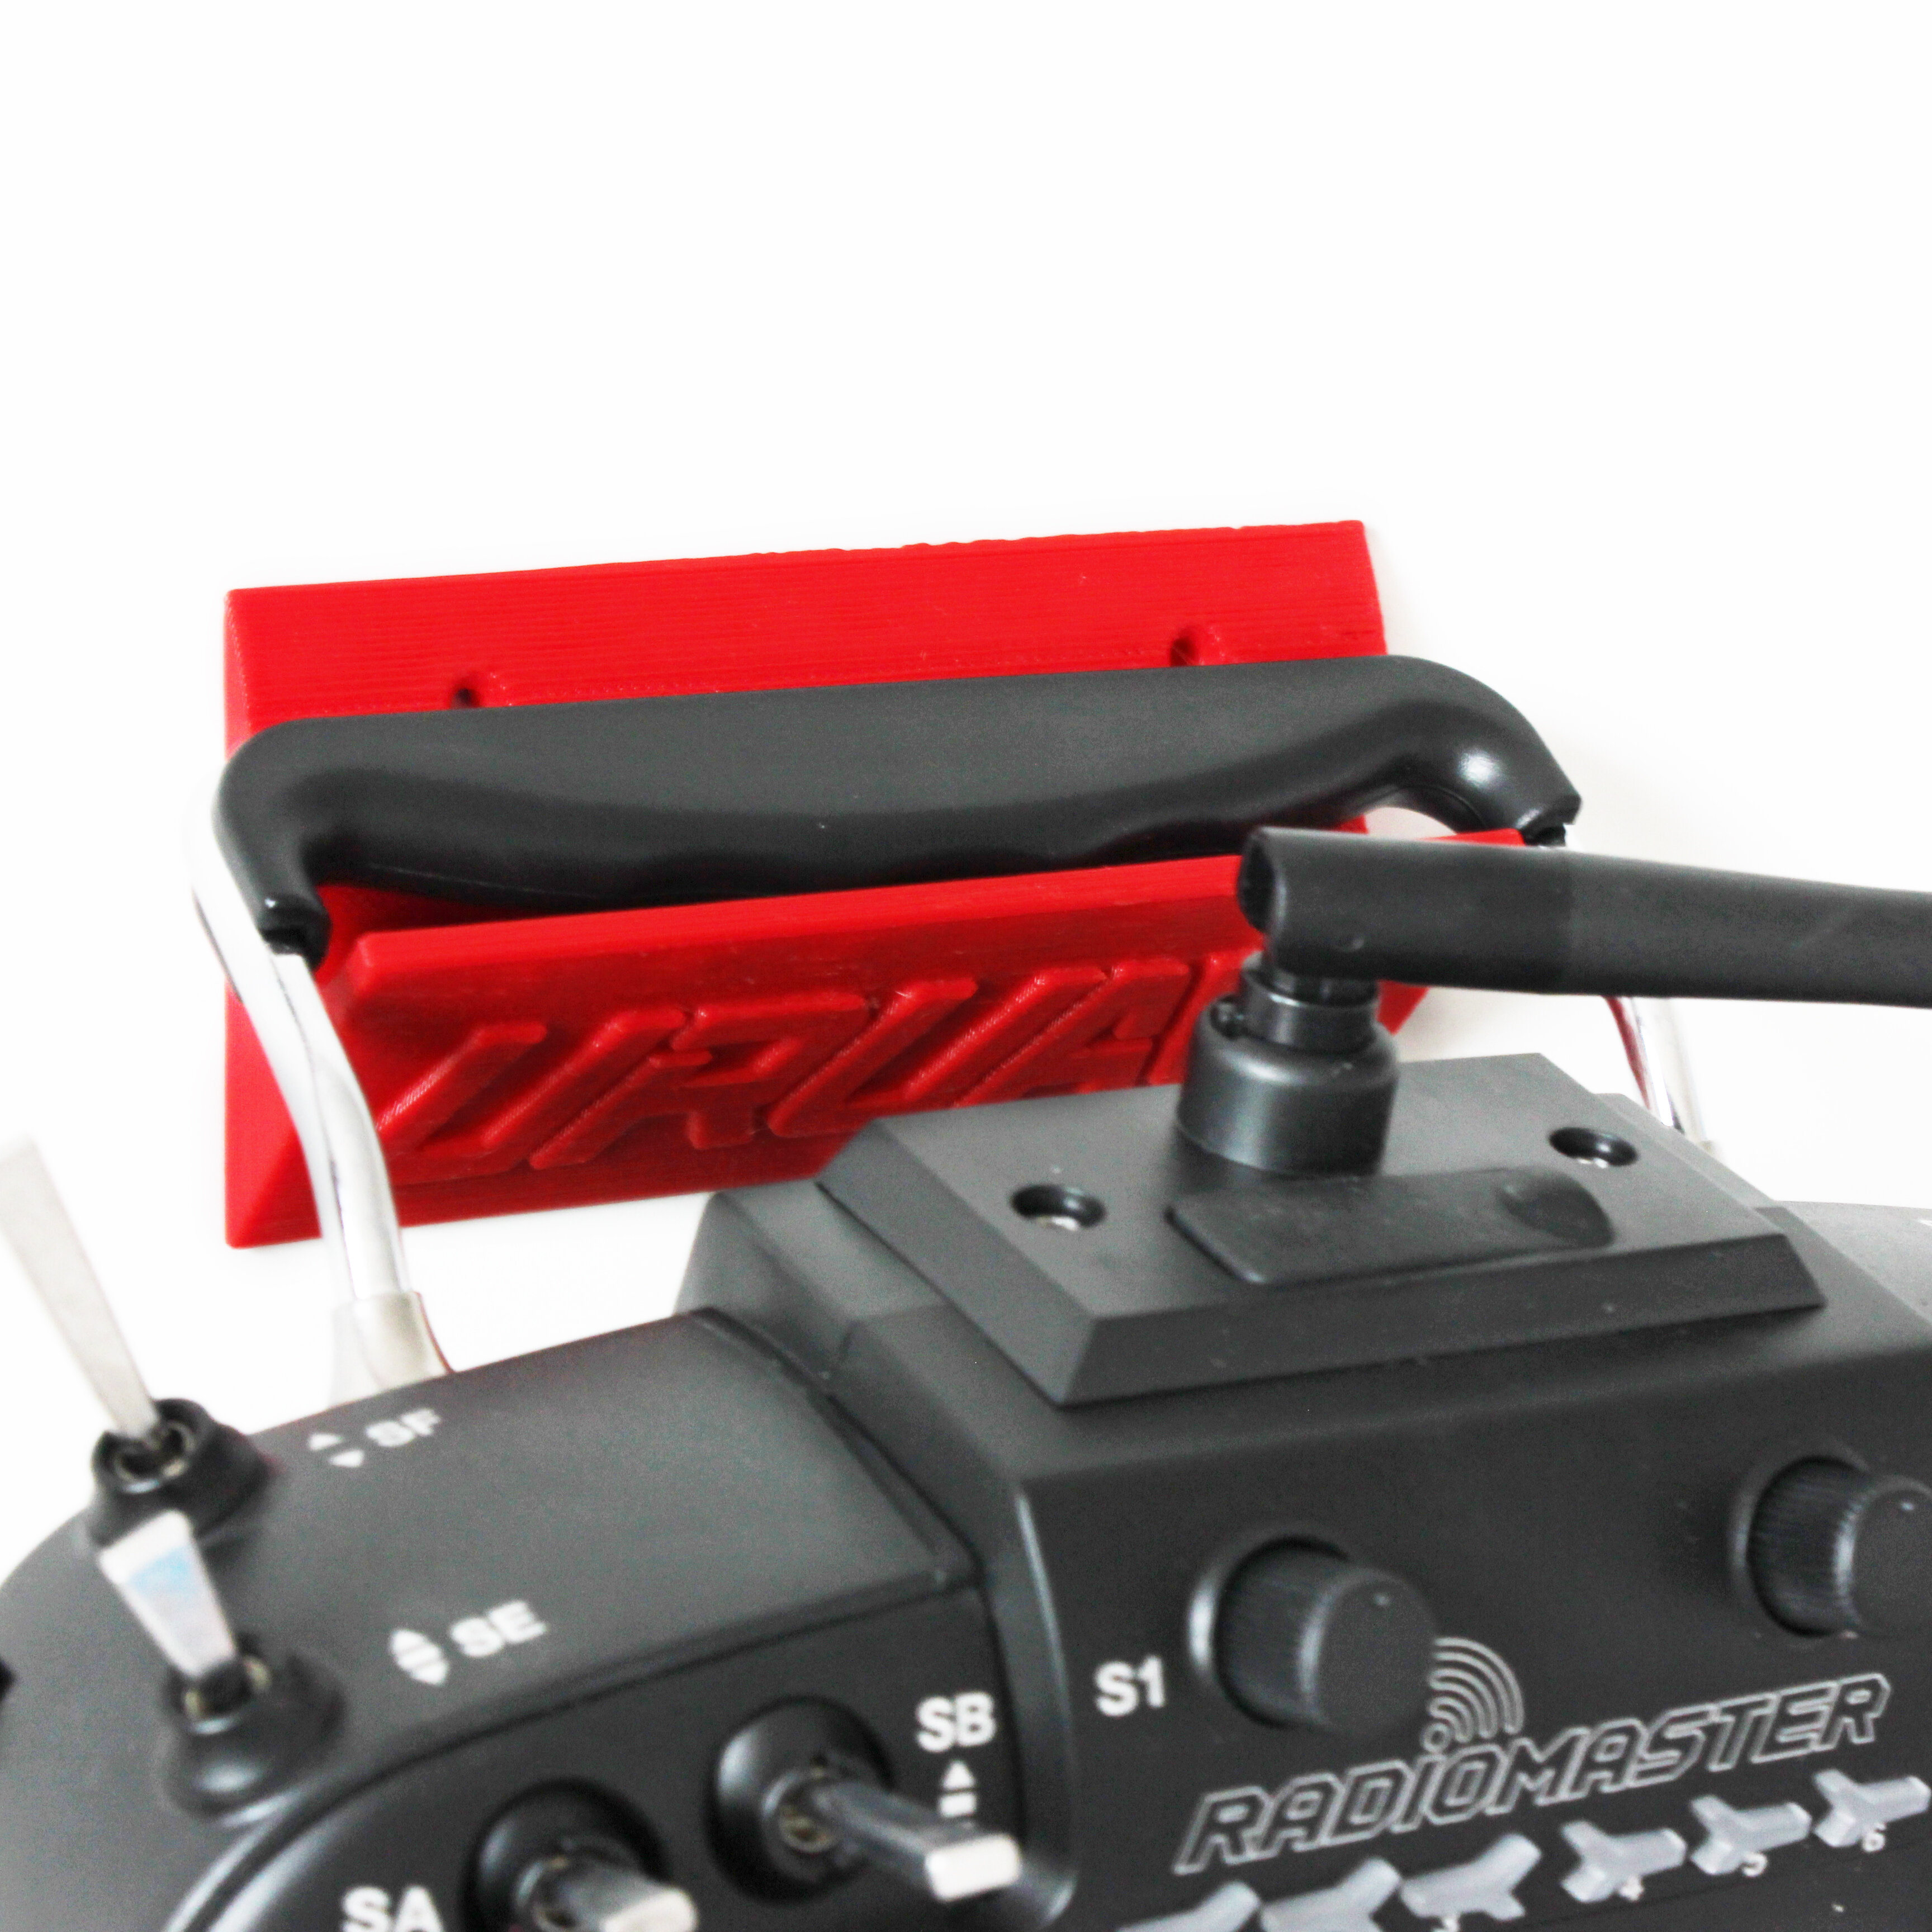 Multi-color URUAV 3D-printen Afstandsbediening Muurbevestiging voor FrSky X9D Radiomaster TX16S Radi